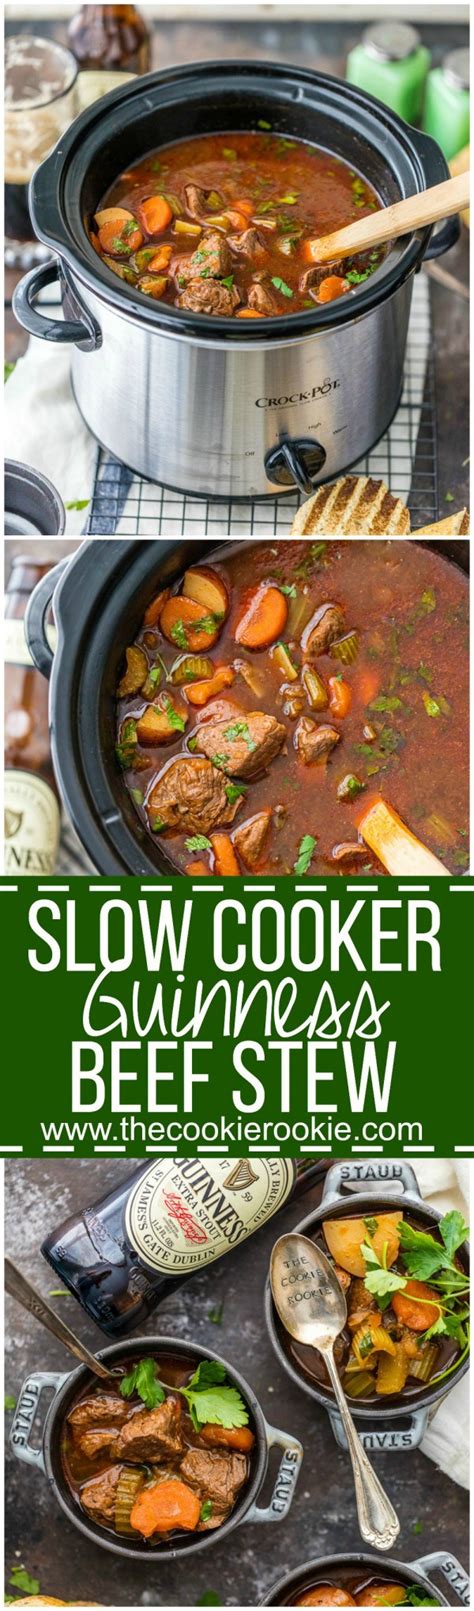 slow cooker guinness beef stew drinkwire